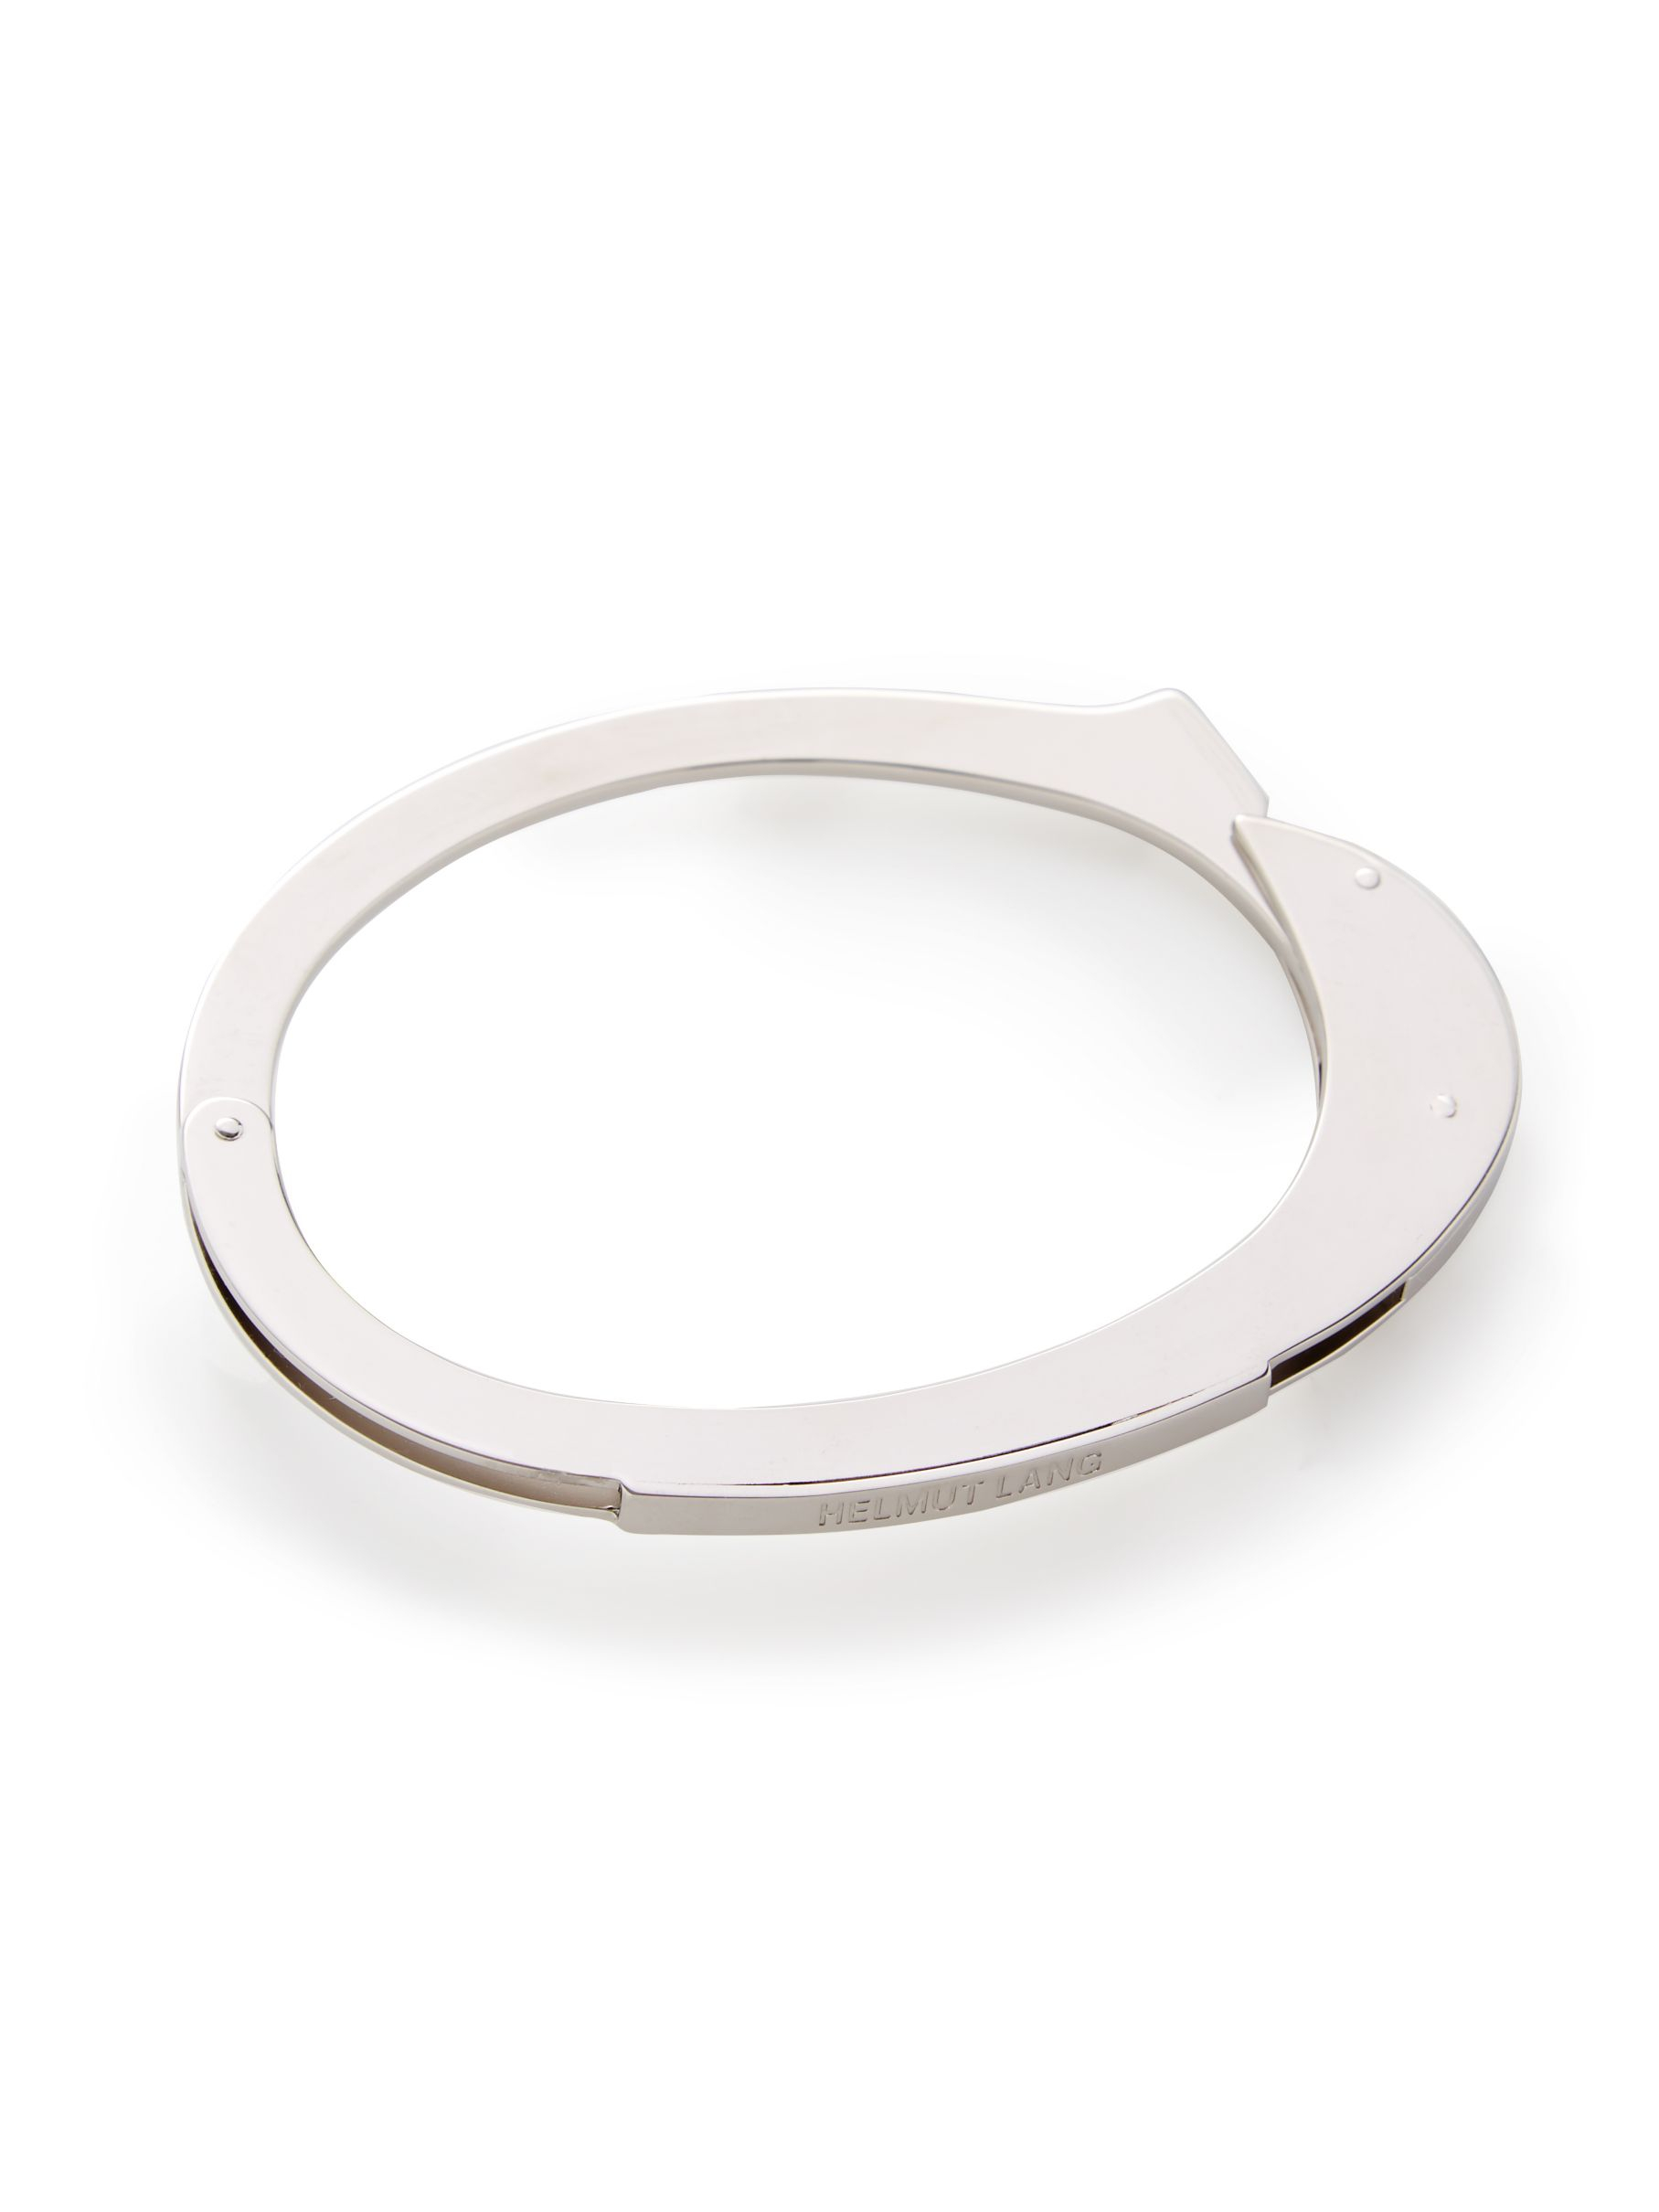 helmut-lang-gray-mens-handcuff-bracelet-product-1-26576260-0-427492046-normal.jpeg